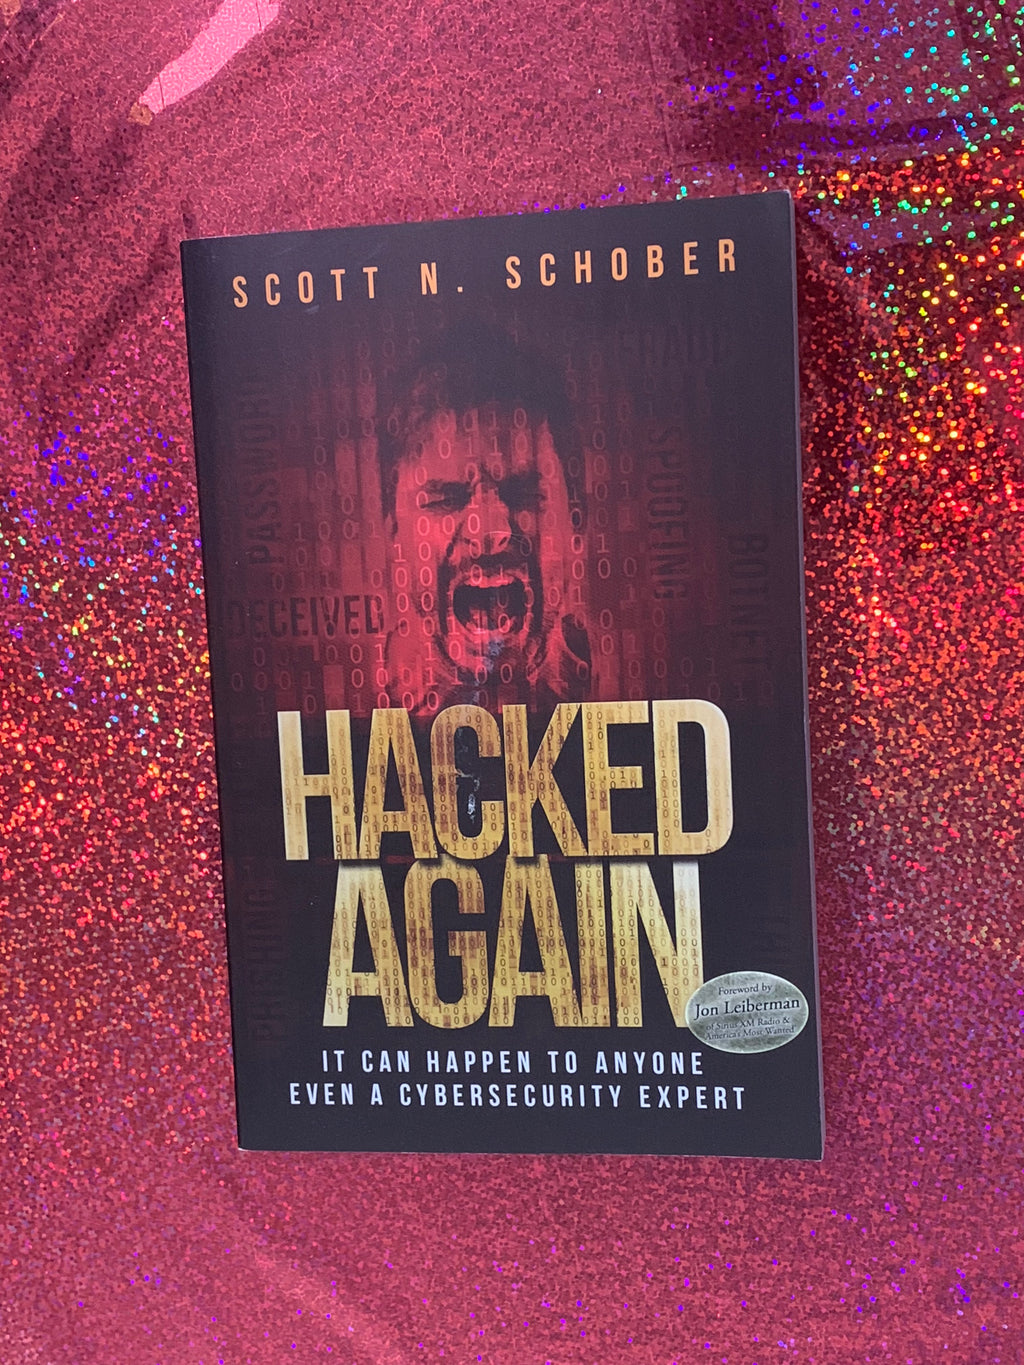 Hacked Again- By Scott N. Schober